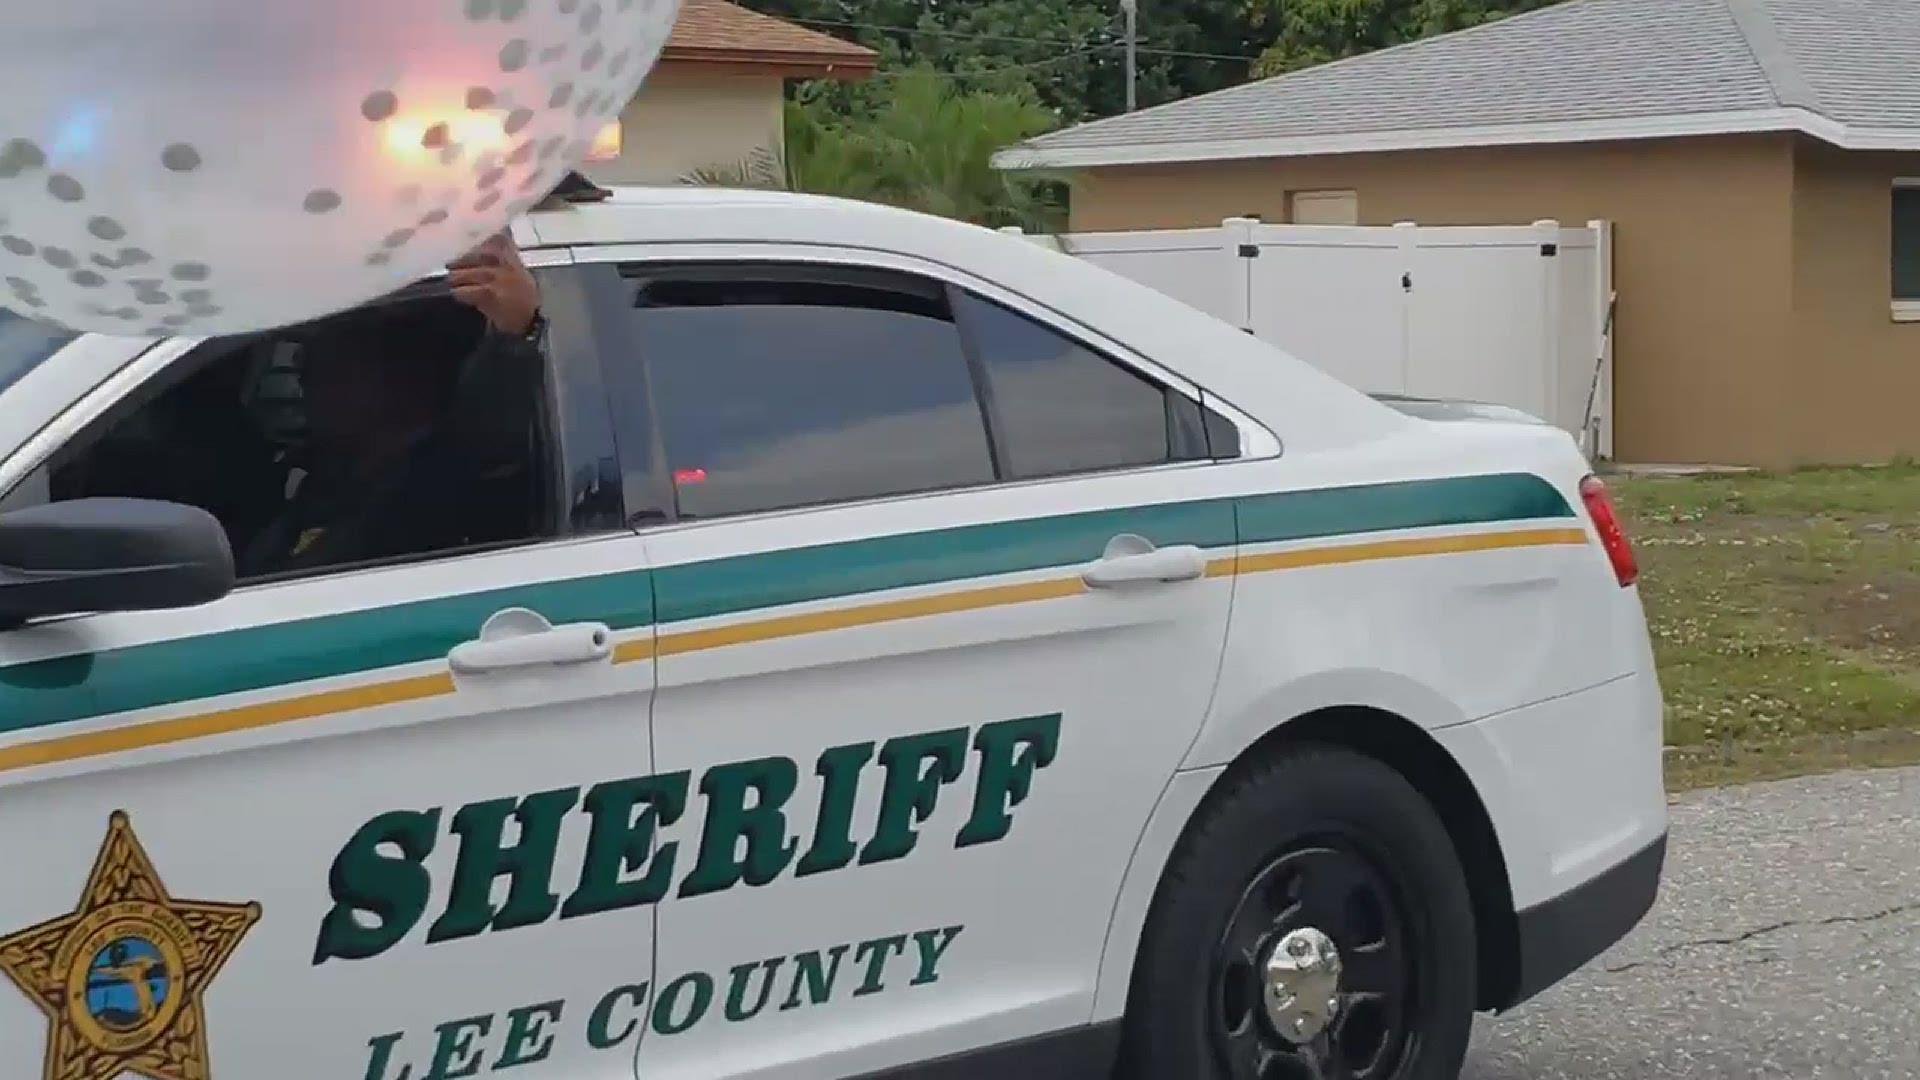 Lee County Sheriff's Office helps veteran celebrate 90th birthday 